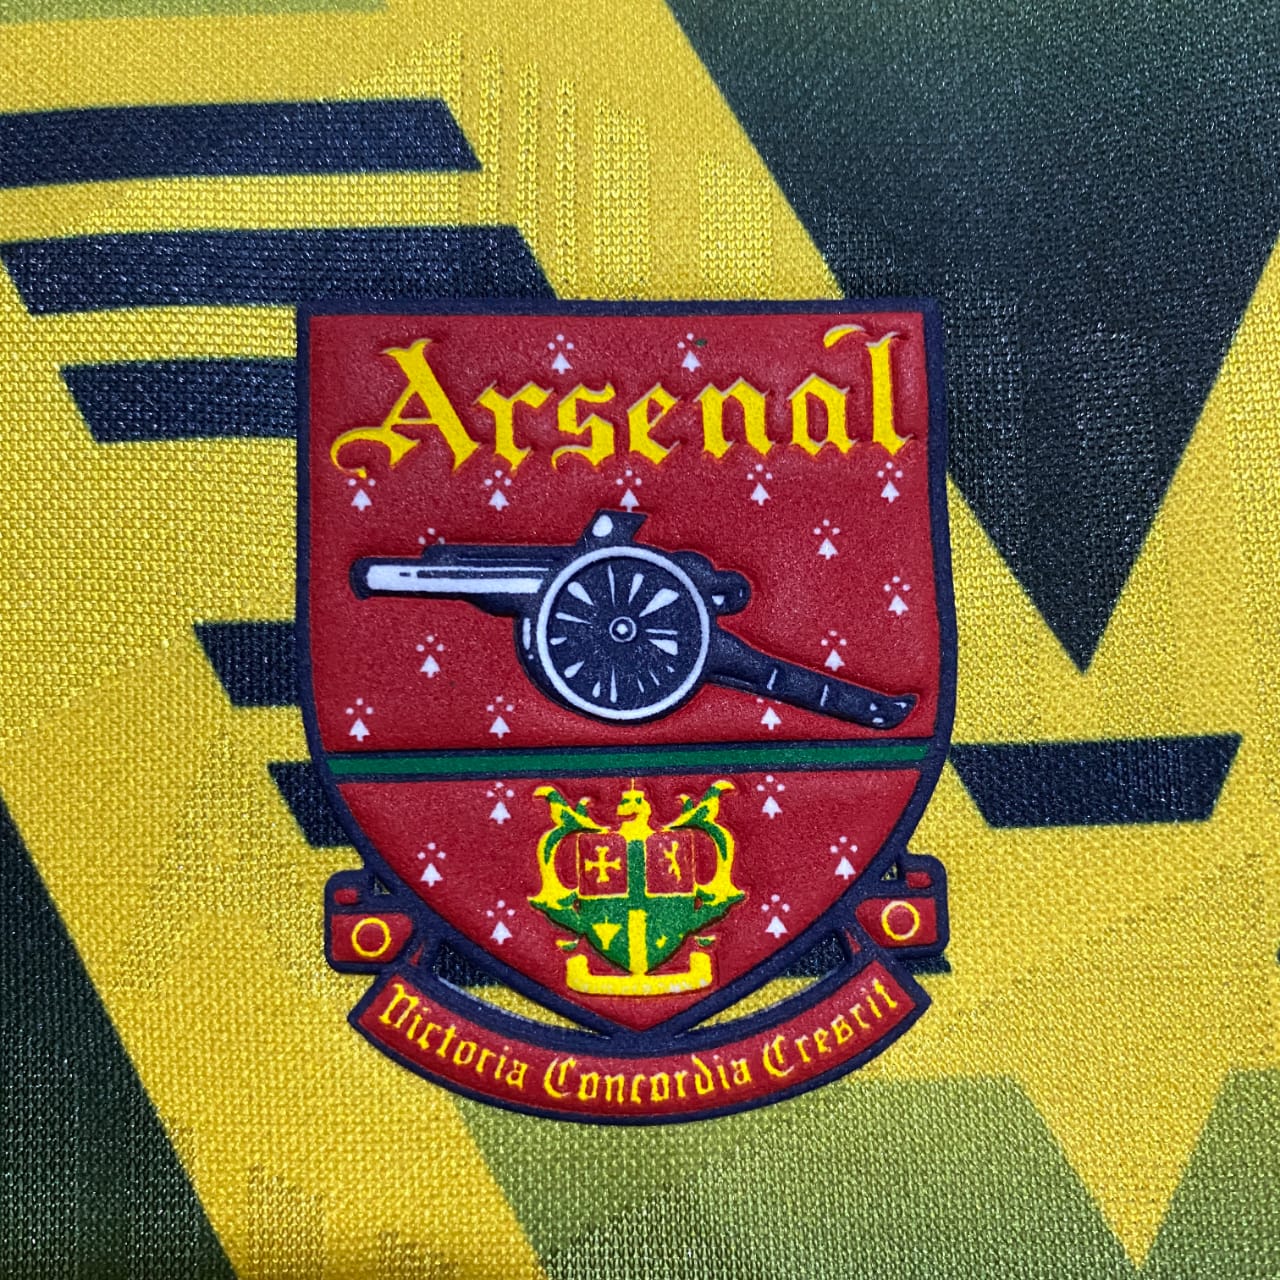 Retro Arsenal Away Kit Bruised Banana